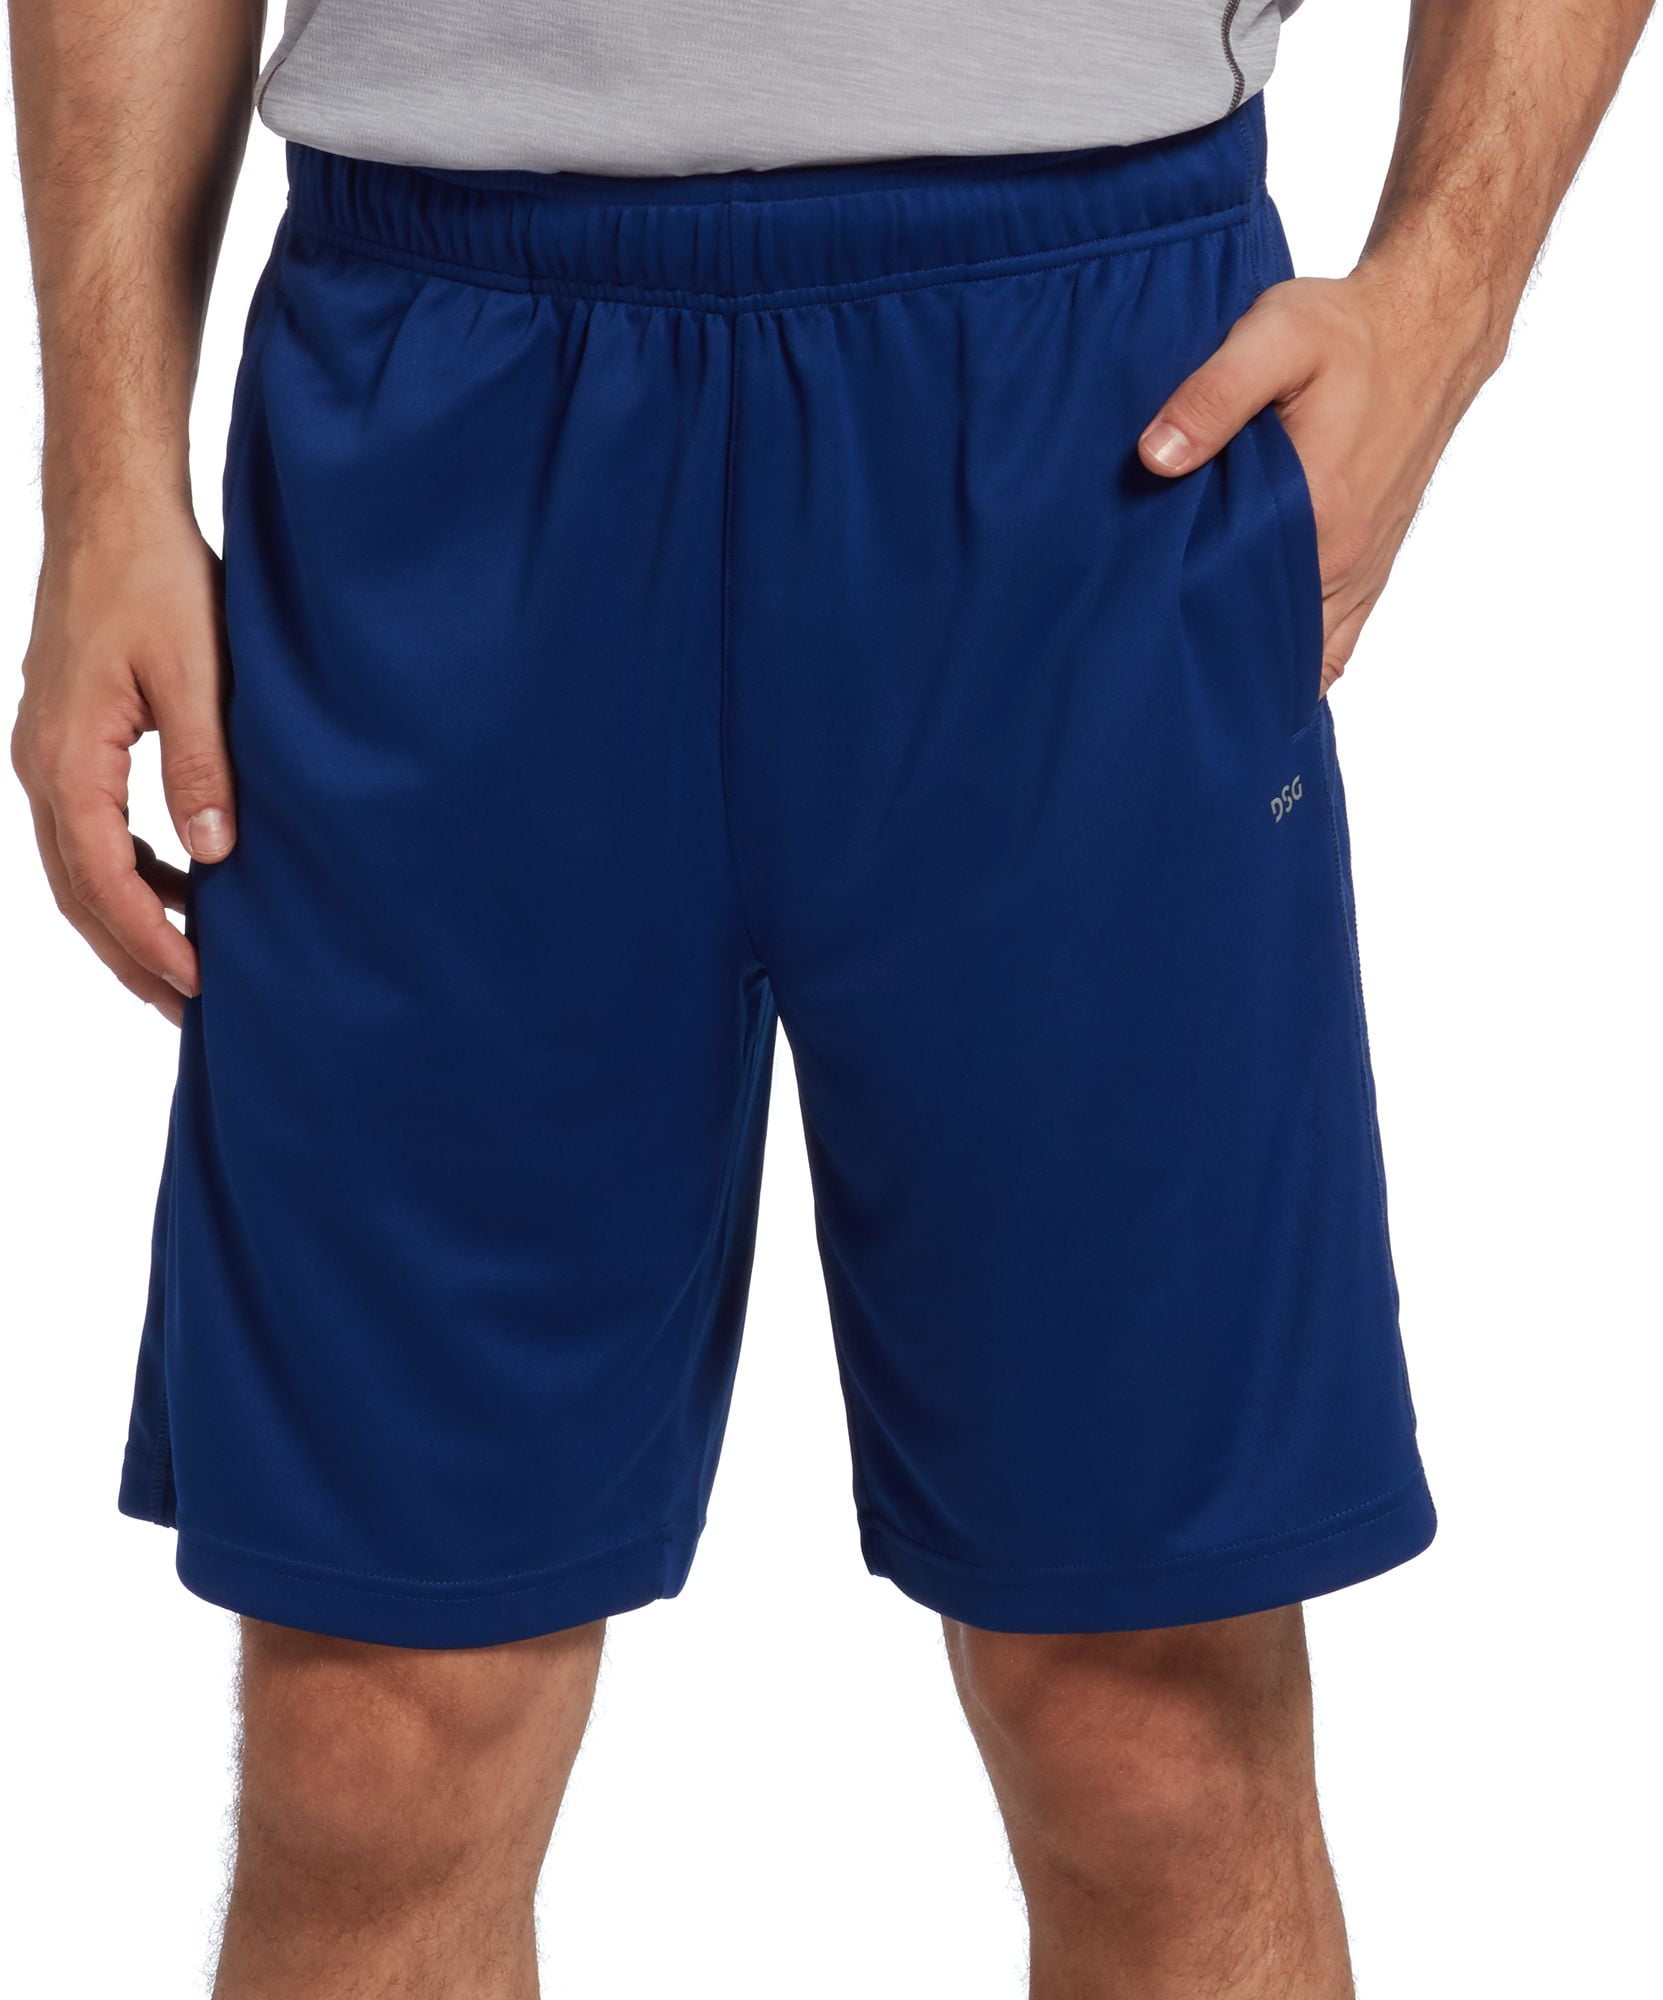 DSG Outerwear - DSG Men's Training Shorts - Walmart.com - Walmart.com